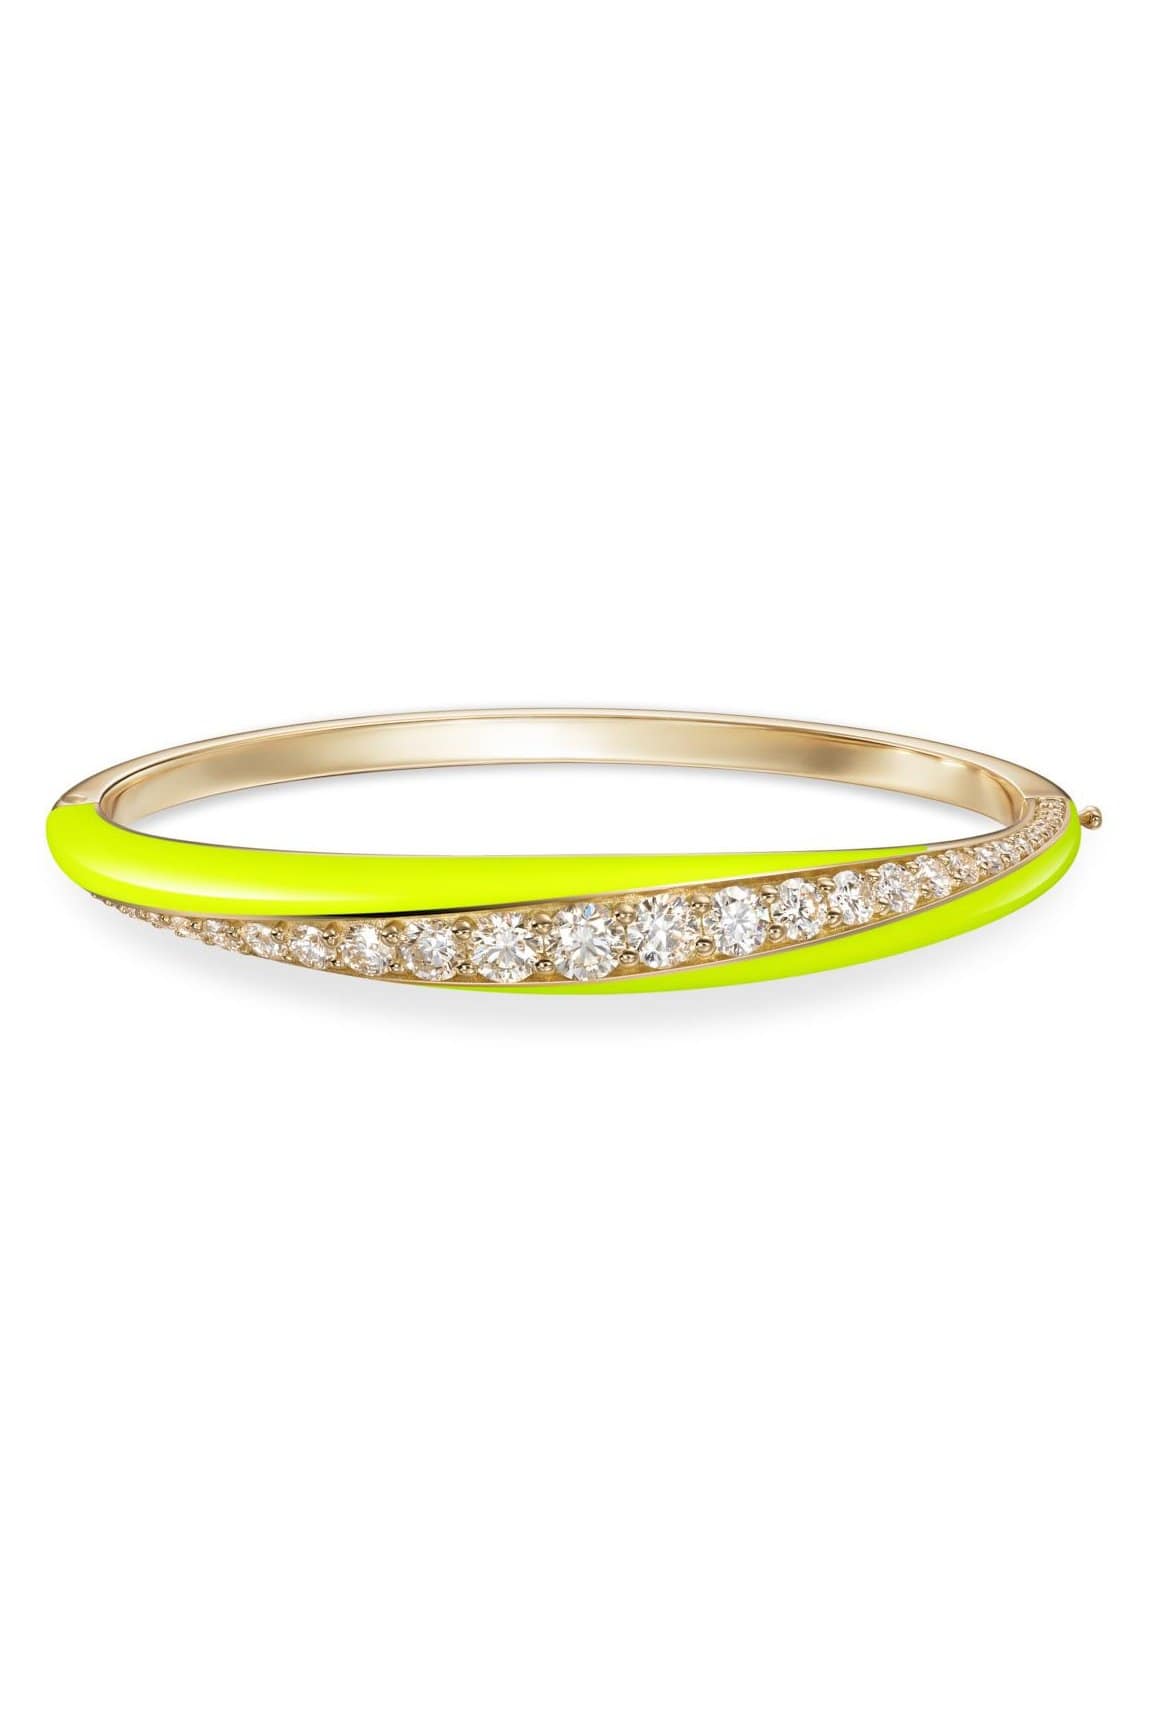 MELISSA KAYE-Neon Yellow Remi Bracelet-YELLOW GOLD